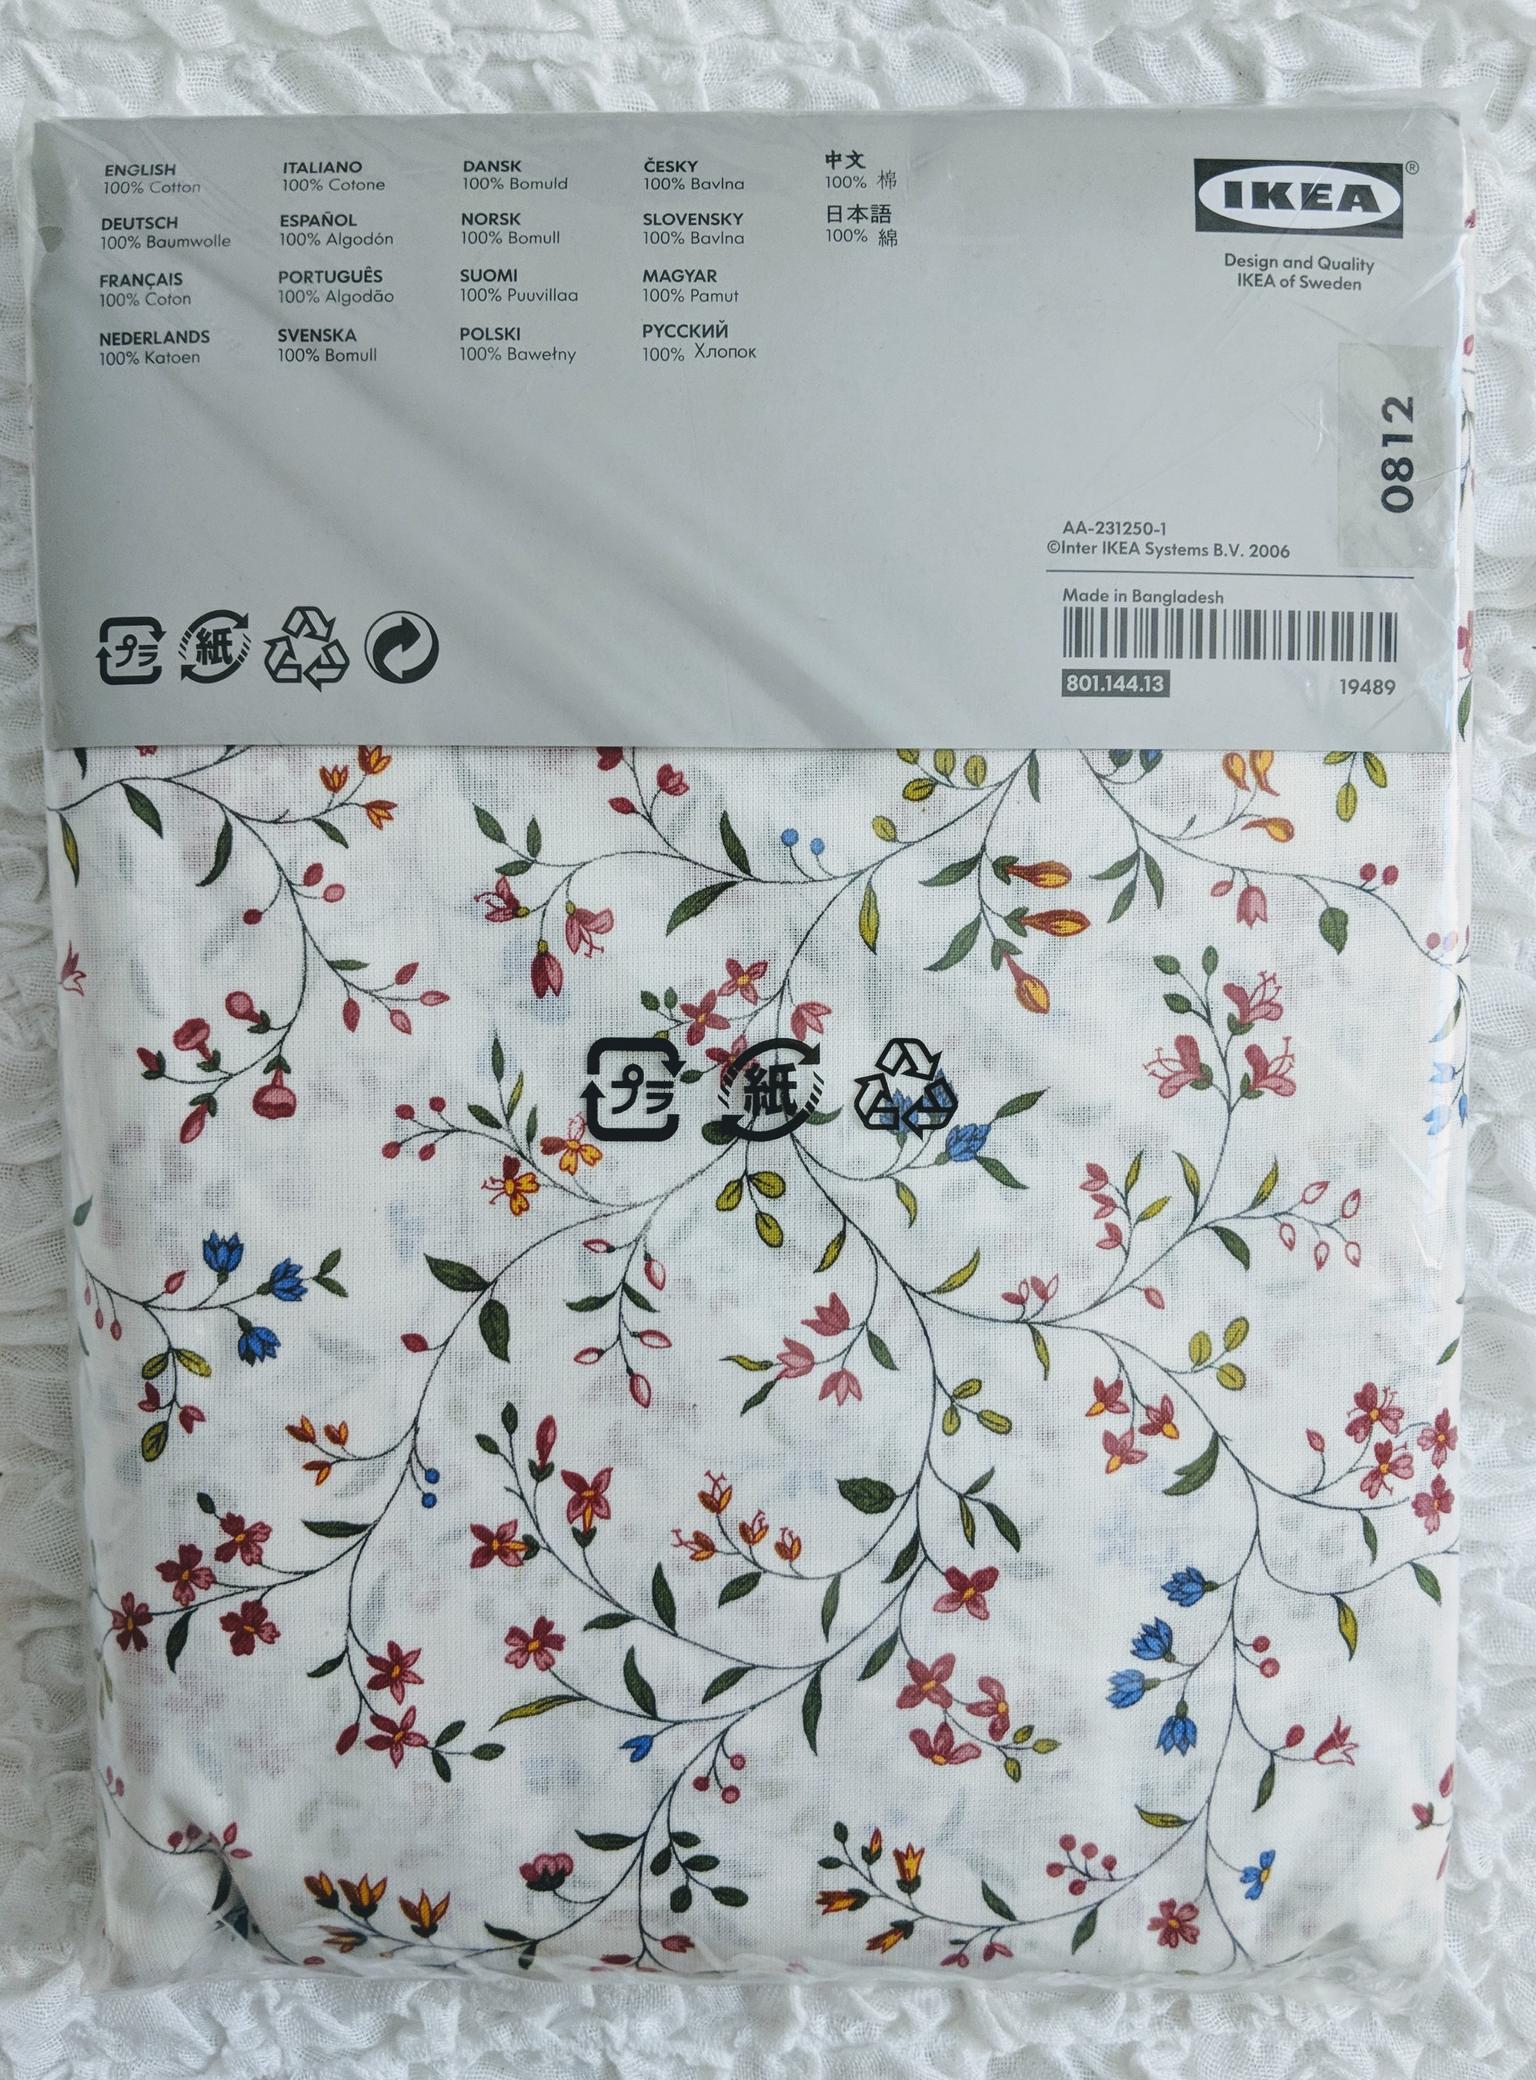 Ikea Bettwasche Alvine Blom Neu Blumen In Friedberg Hessen For 30 00 For Sale Shpock